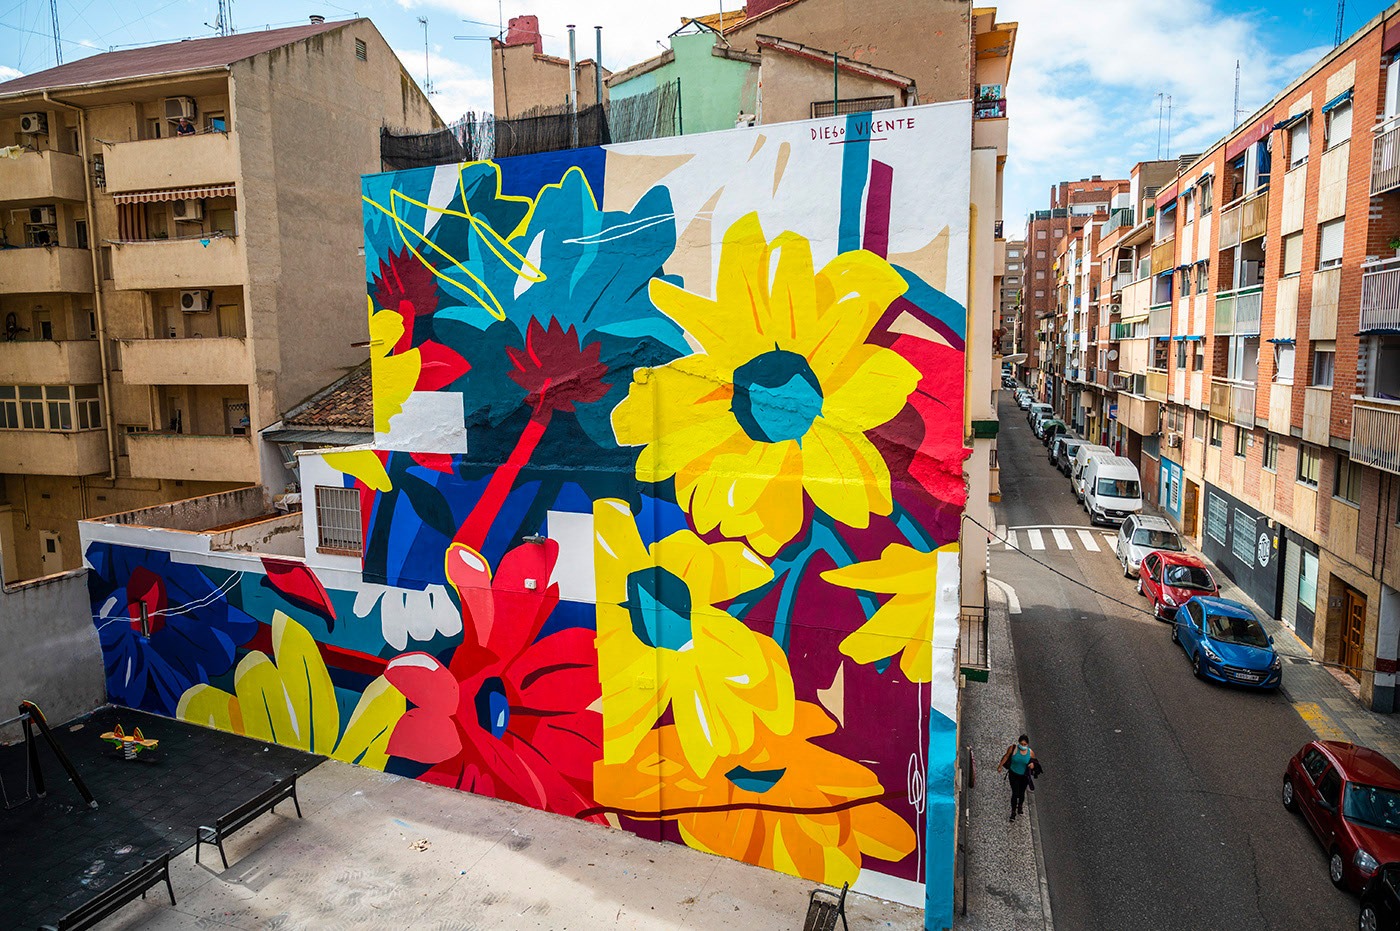 Diego Vicente街头壁画艺术作品